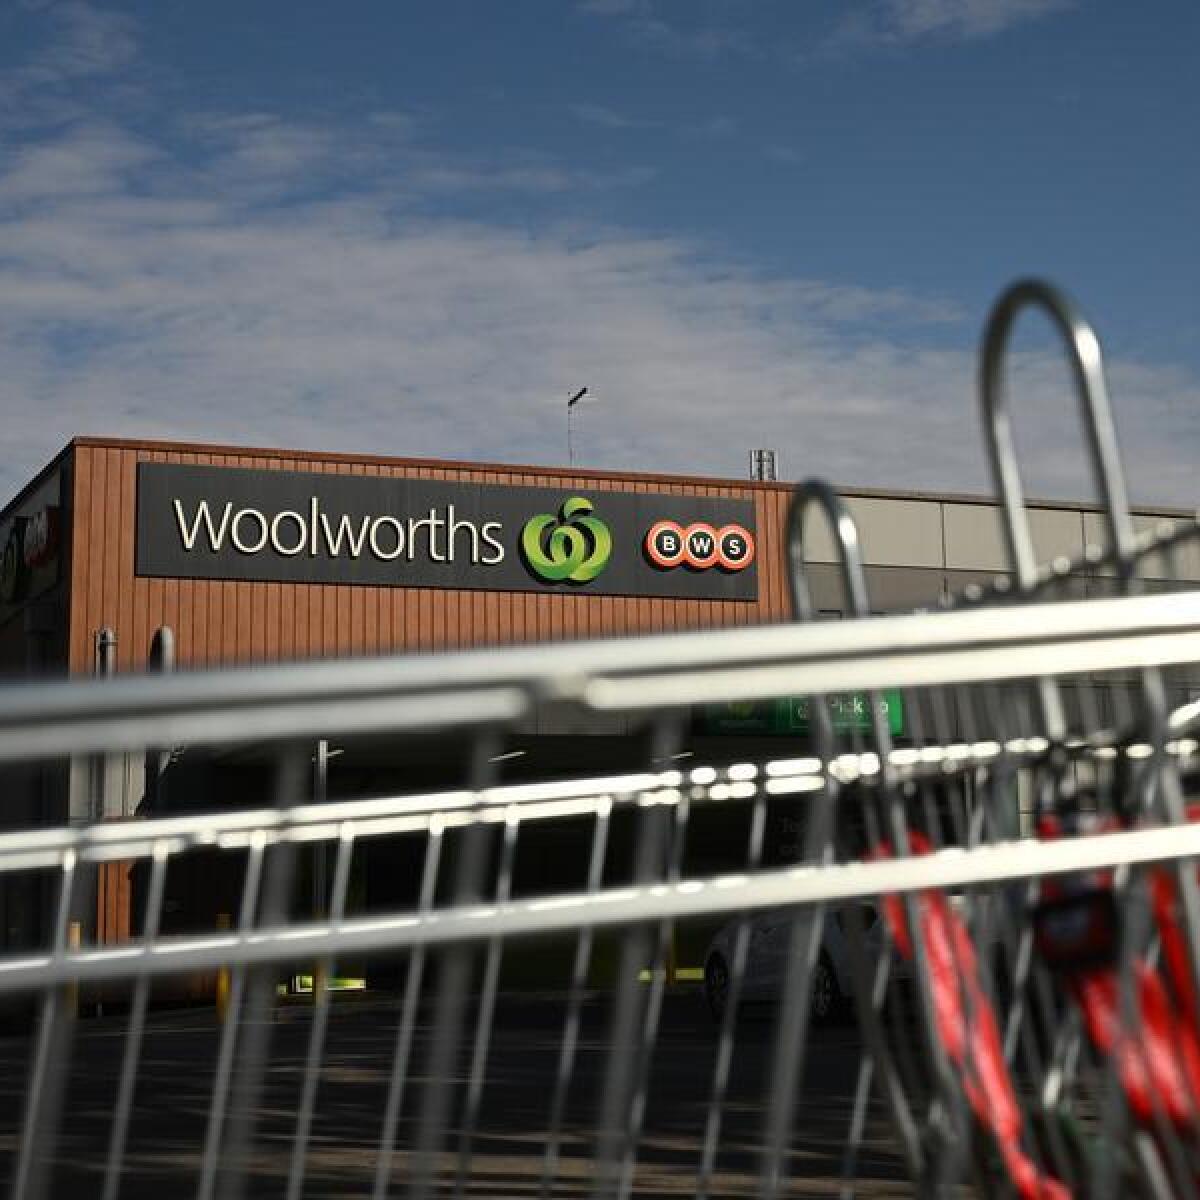 Woolworths signage (file image)